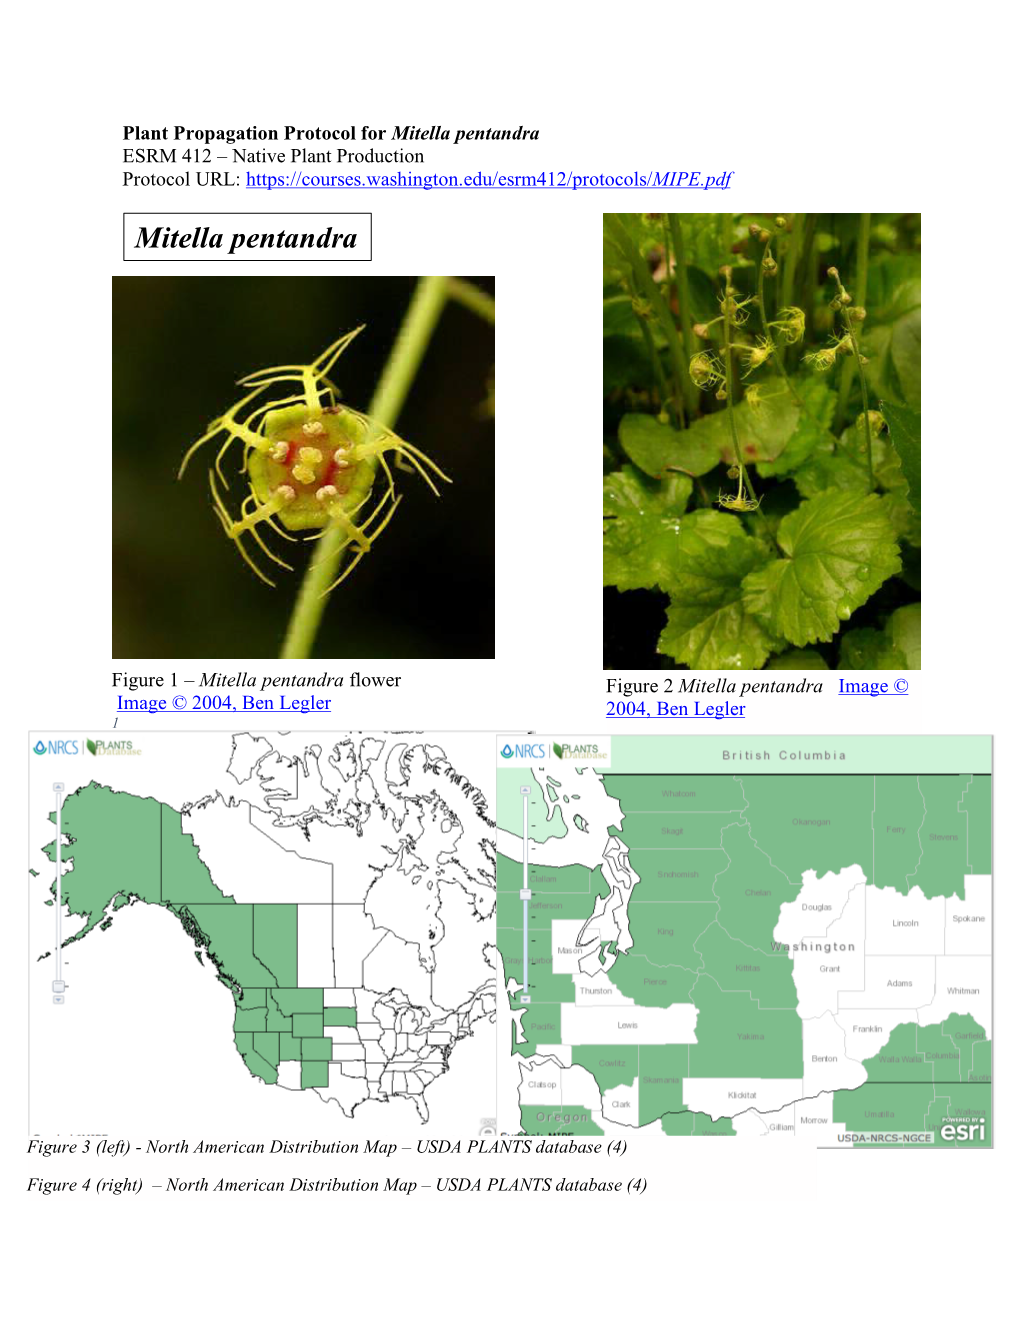 Mitella Pentandra ESRM 412 – Native Plant Production Protocol URL